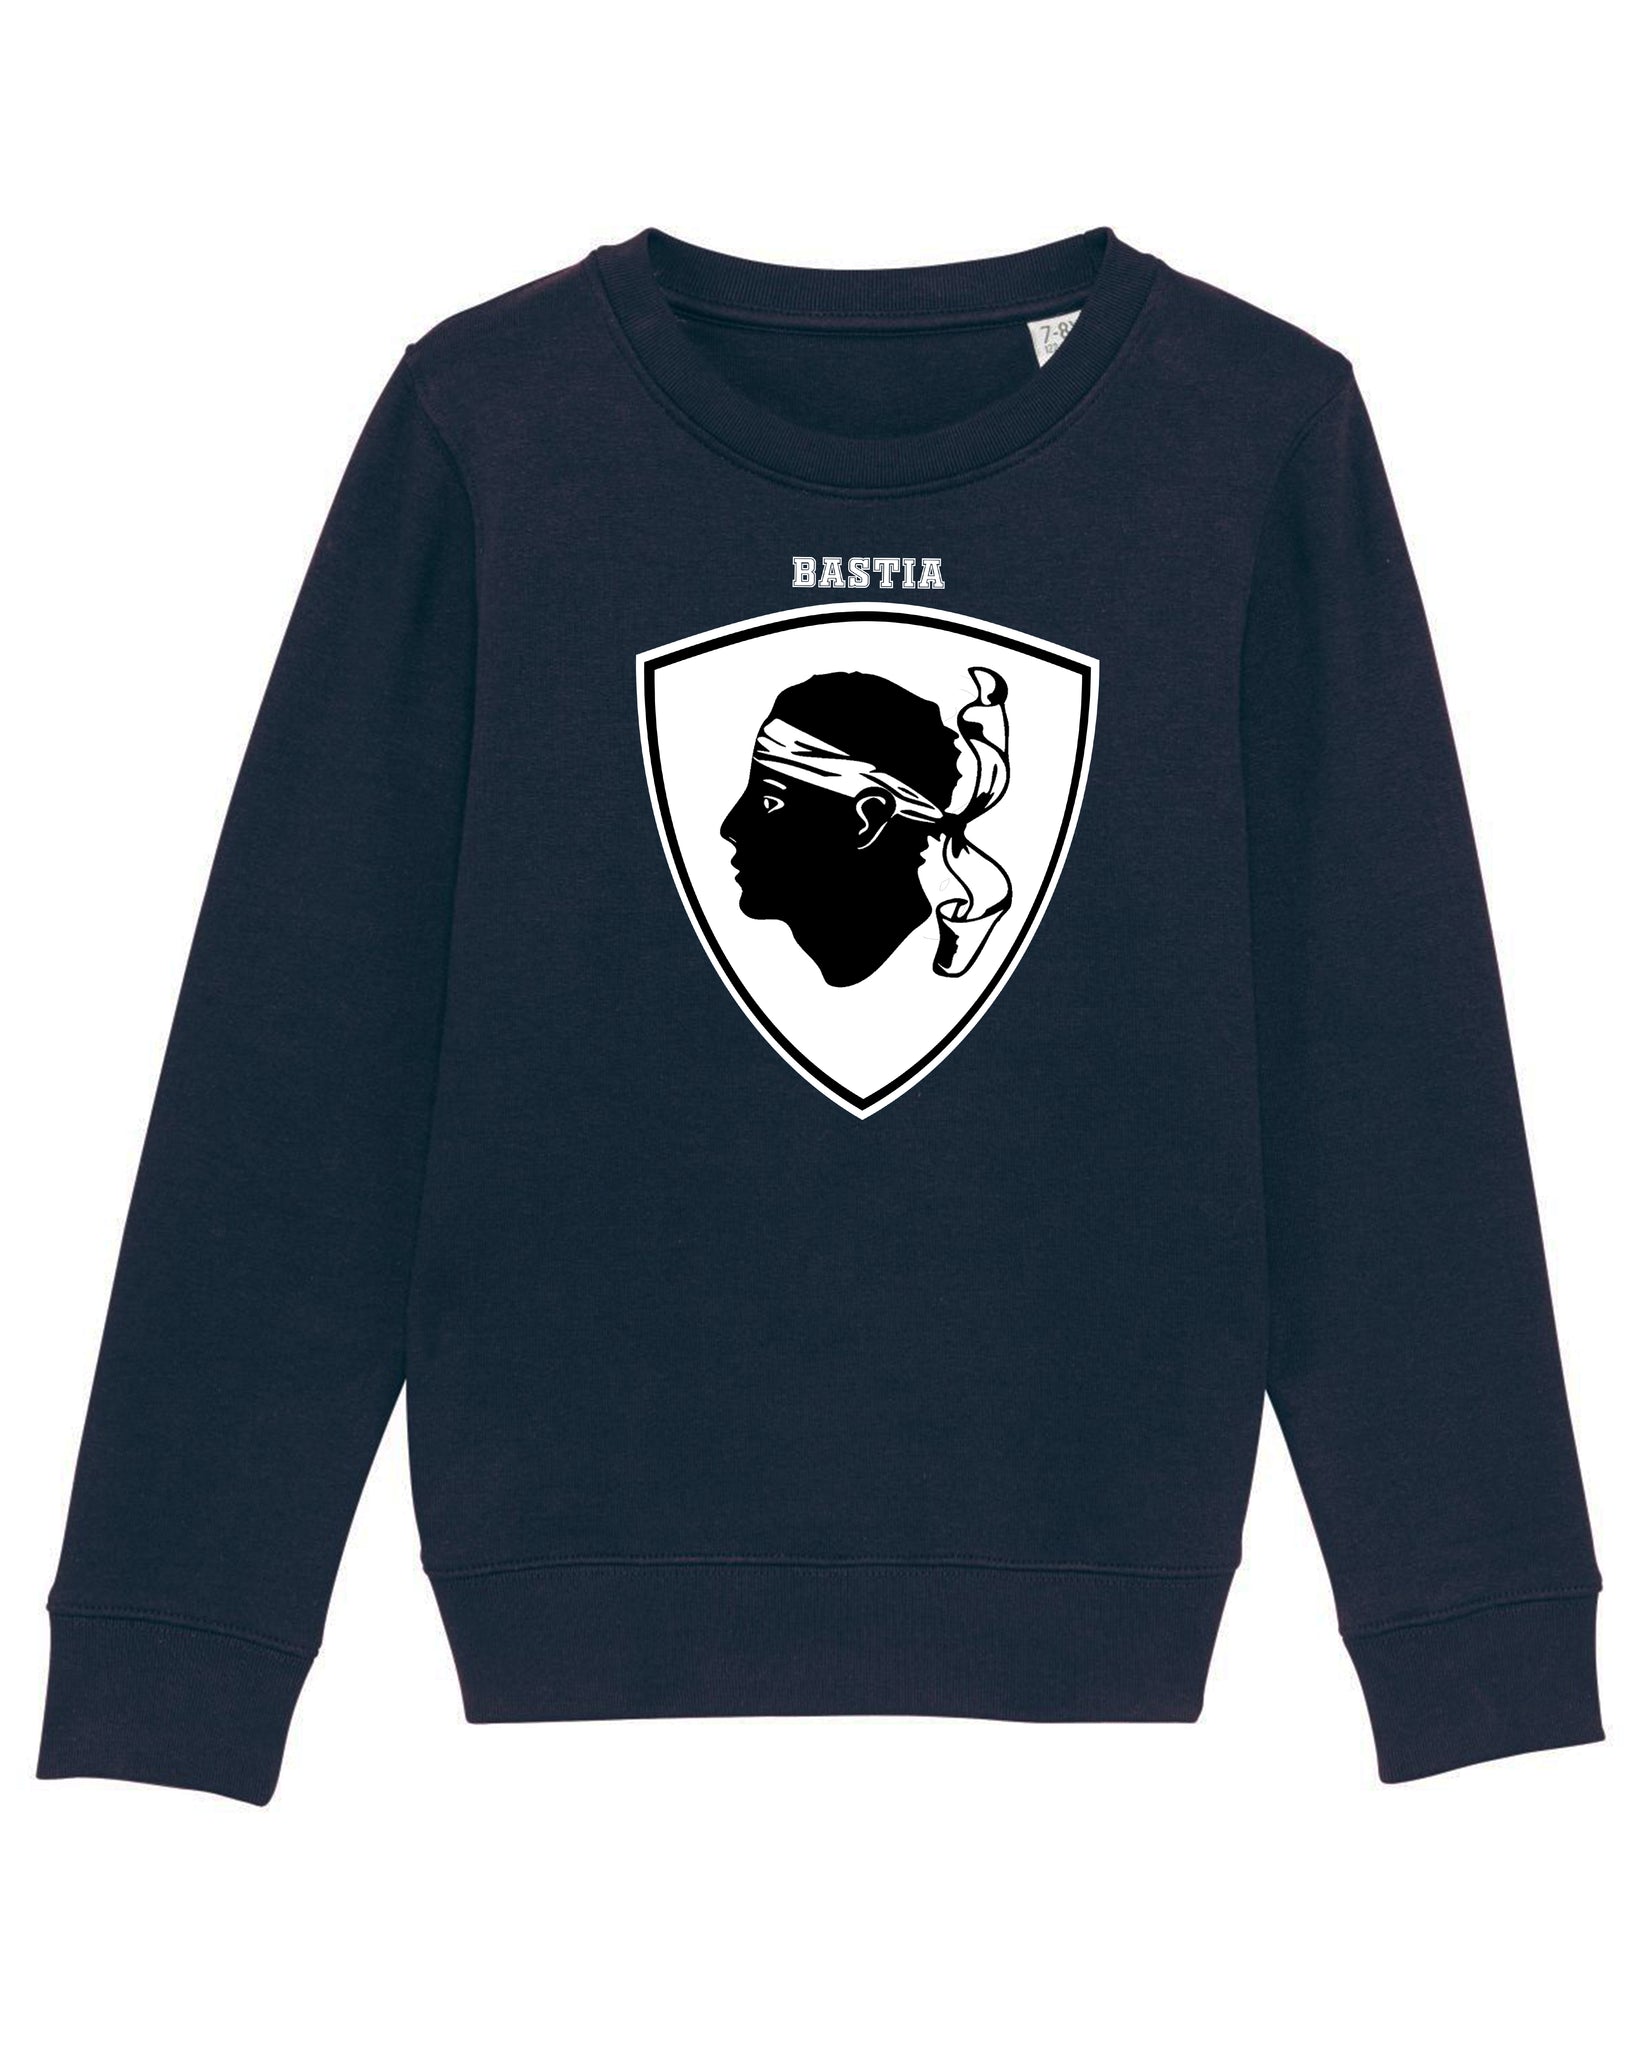 Bastia Retro children's sweatshirt